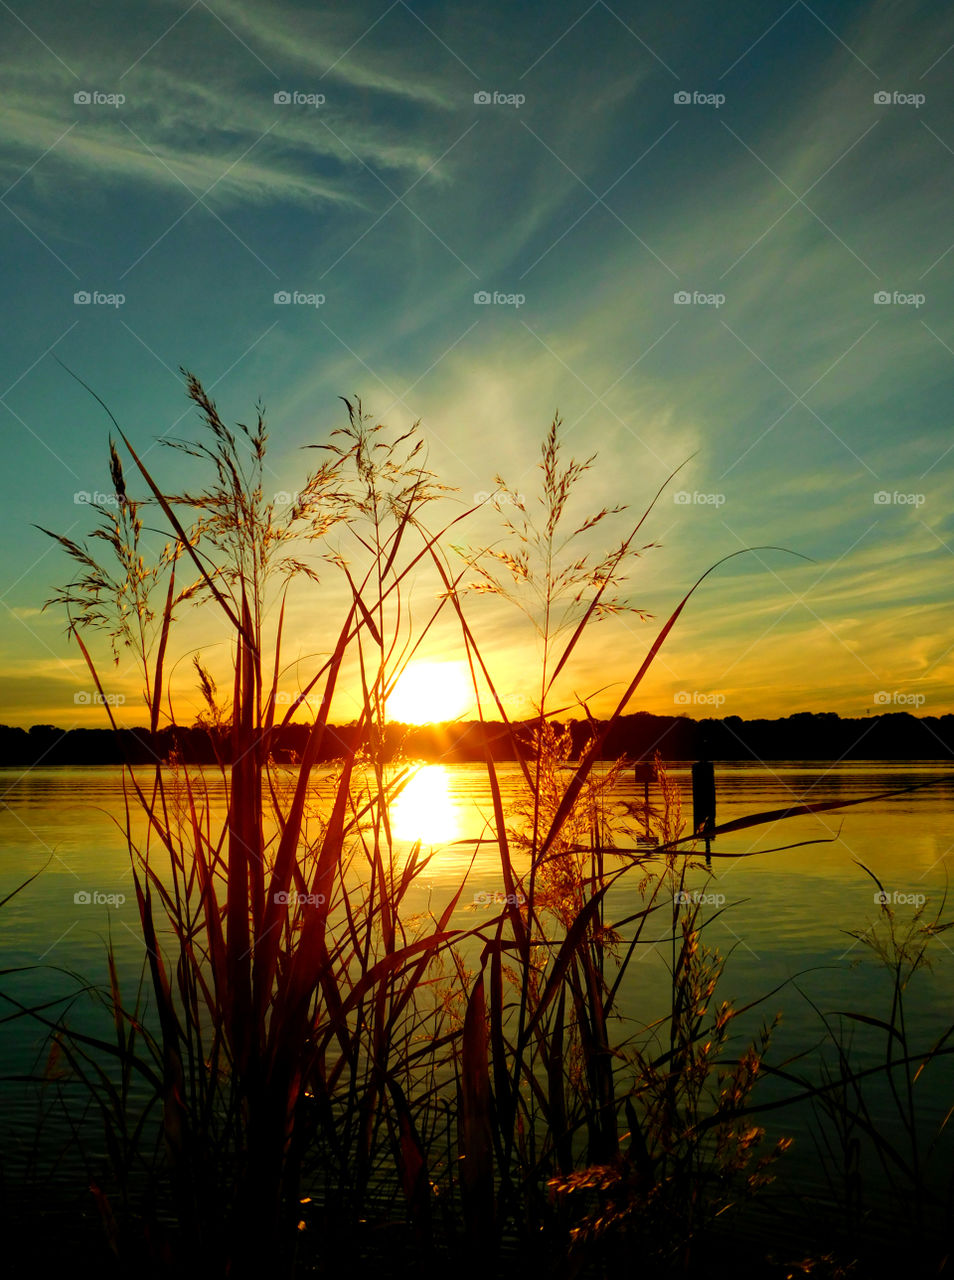 Sun reflecting on the lake at sunset